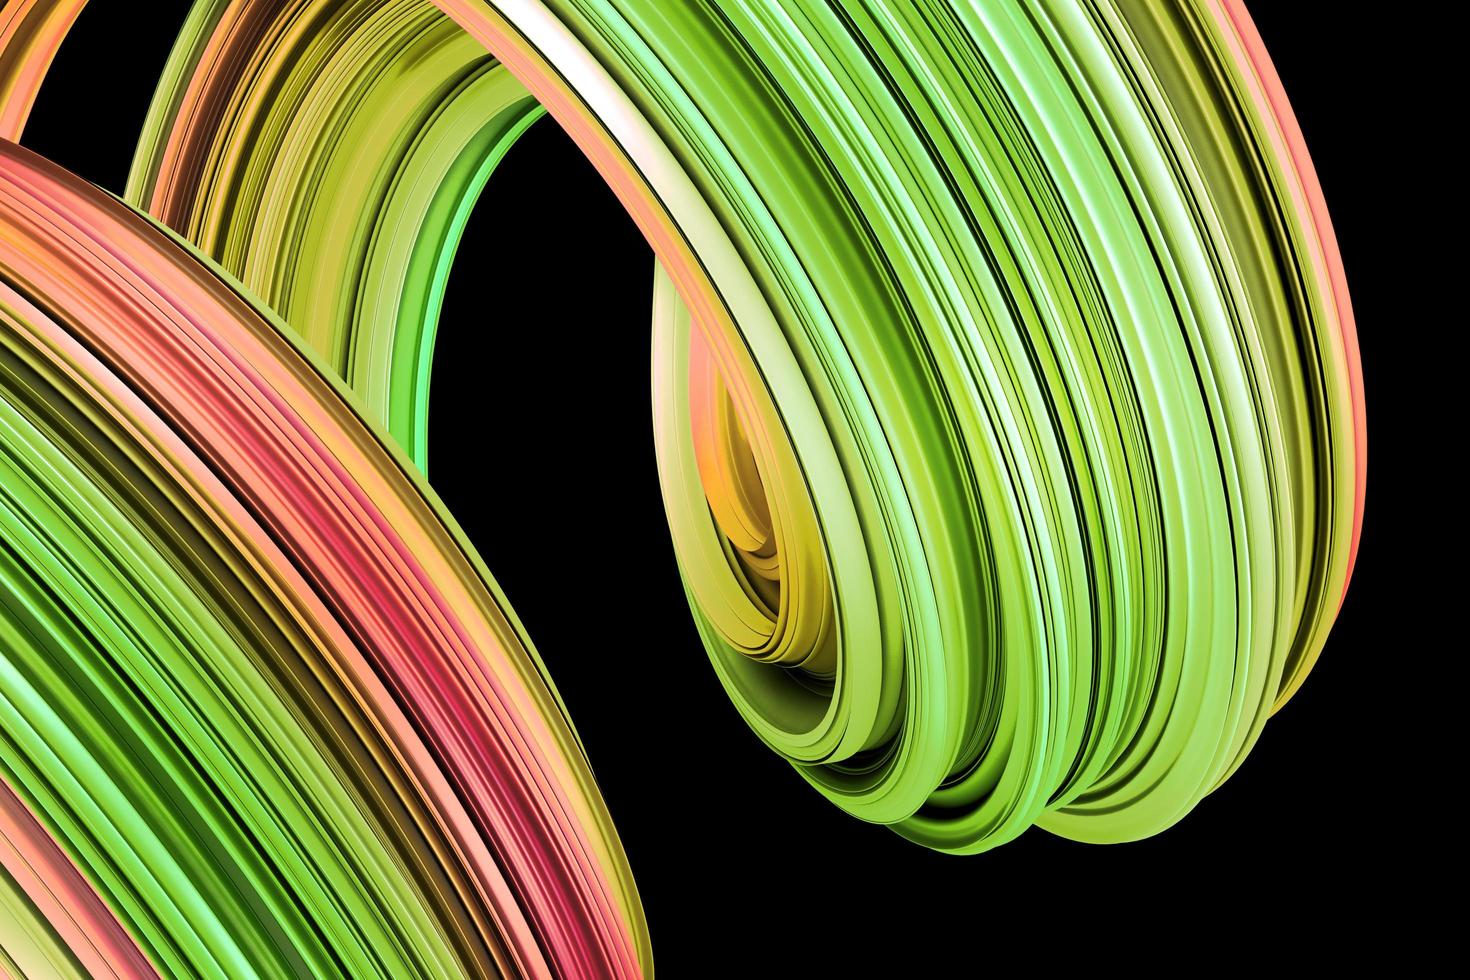 abstracte groene gedraaide penseelstreek 3d illustratie. kleurrijk swirl-object op zwarte achtergrond foto